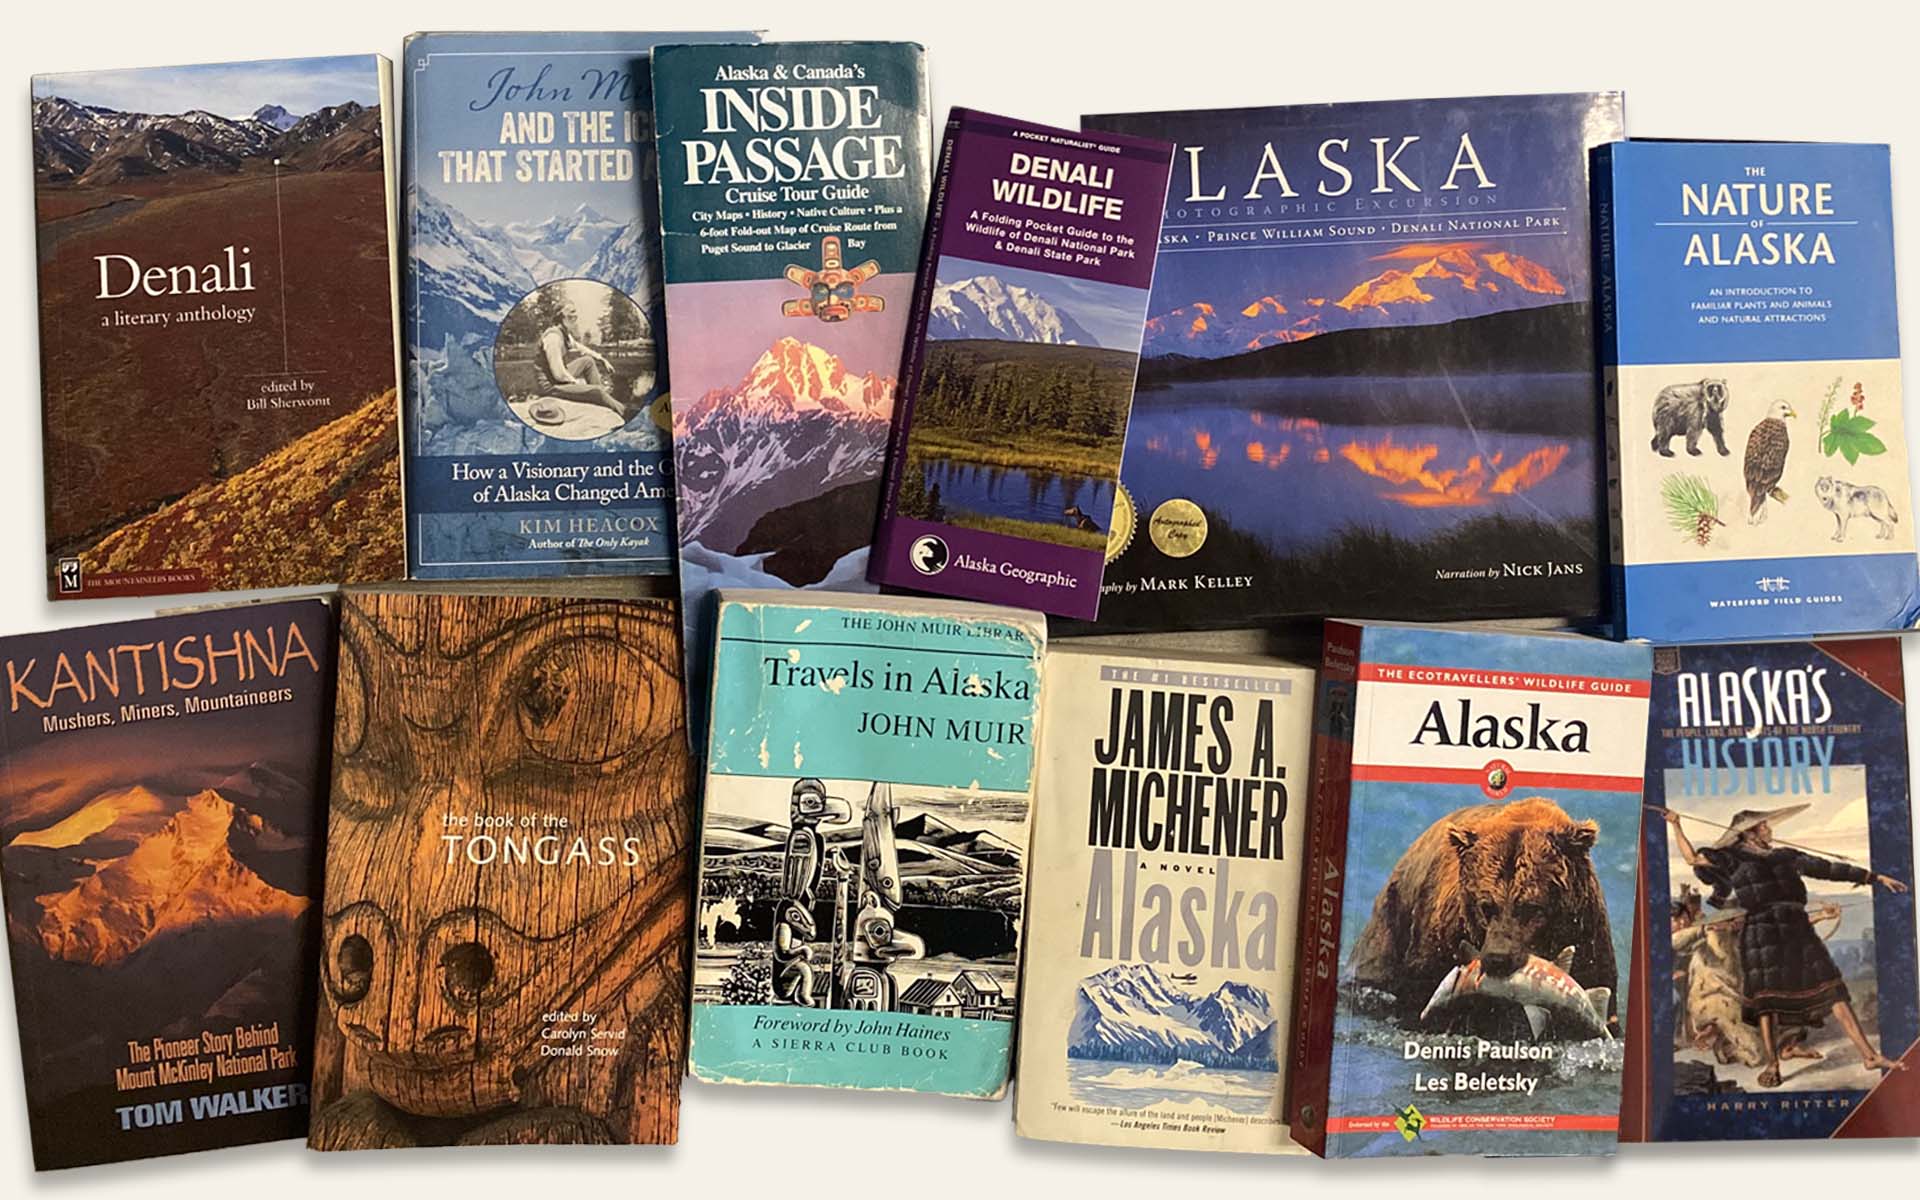 alaska travel book